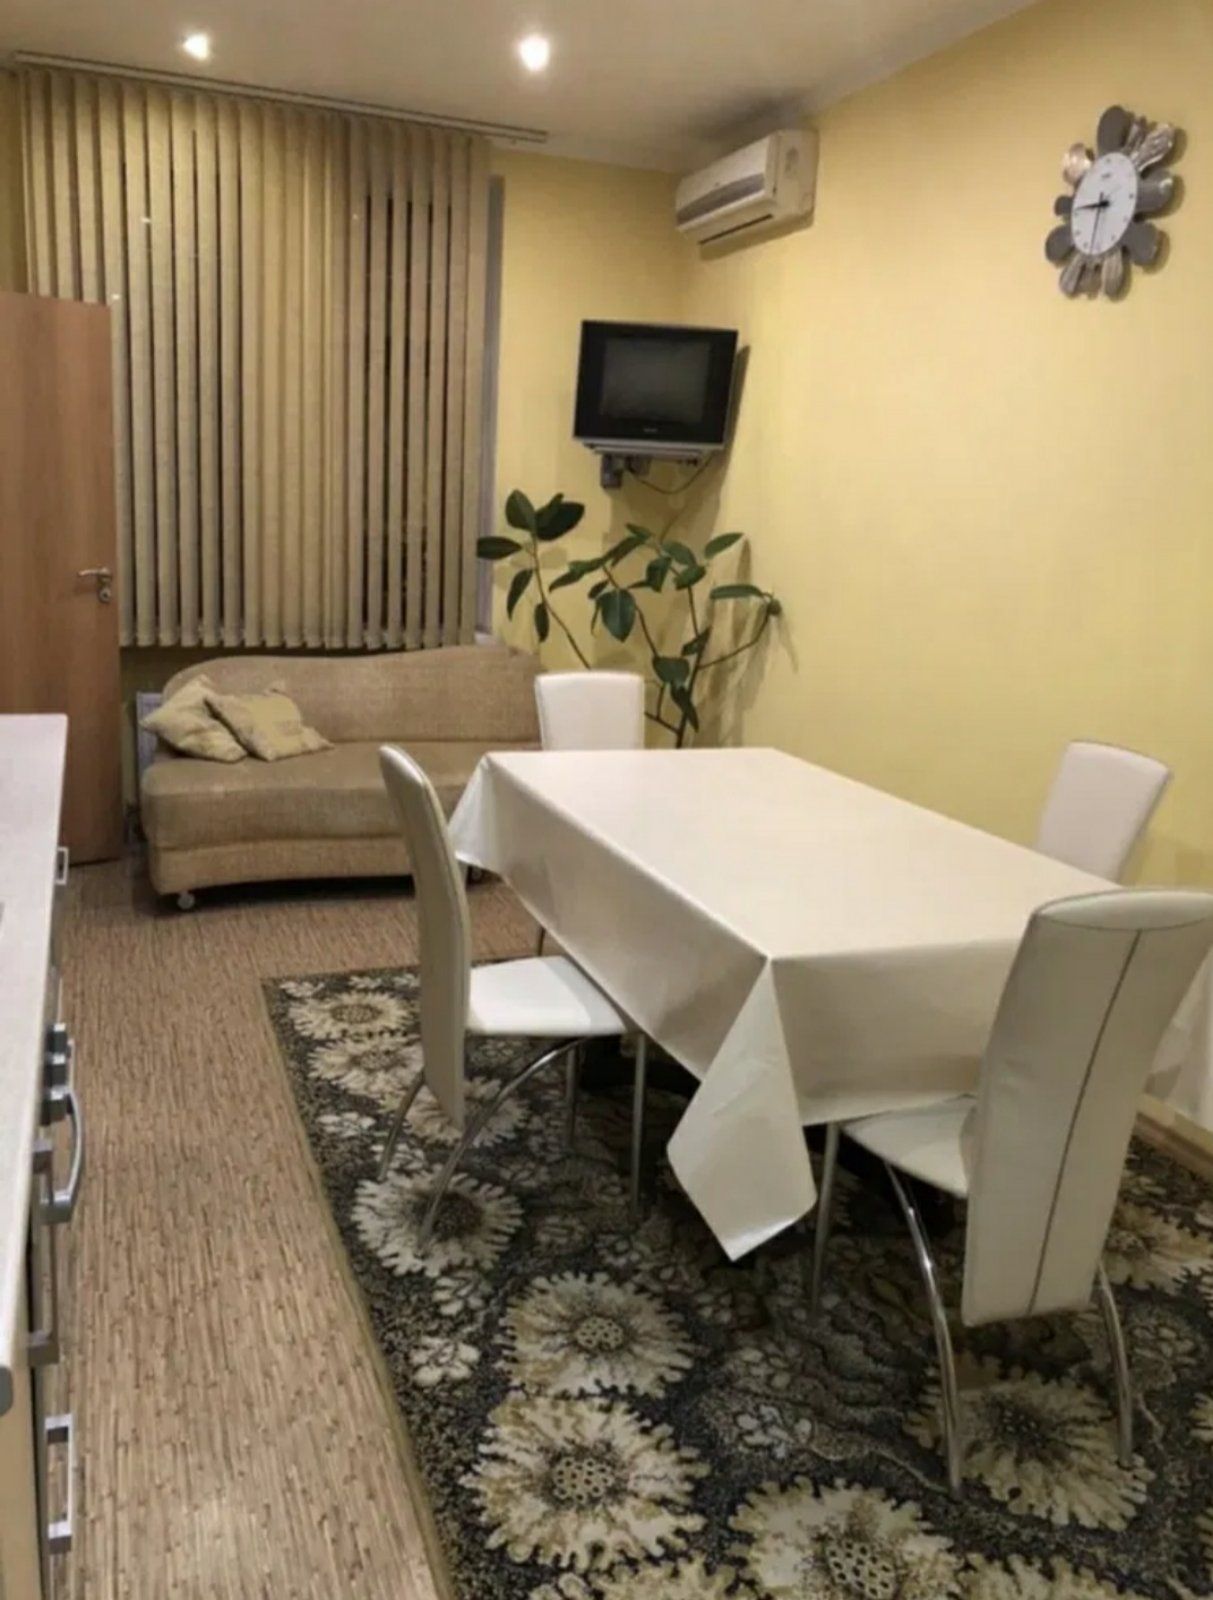 Продам 2-комнатную квартиру в районе Музкомедии с ремонтом ID 51021 (Фото 5)